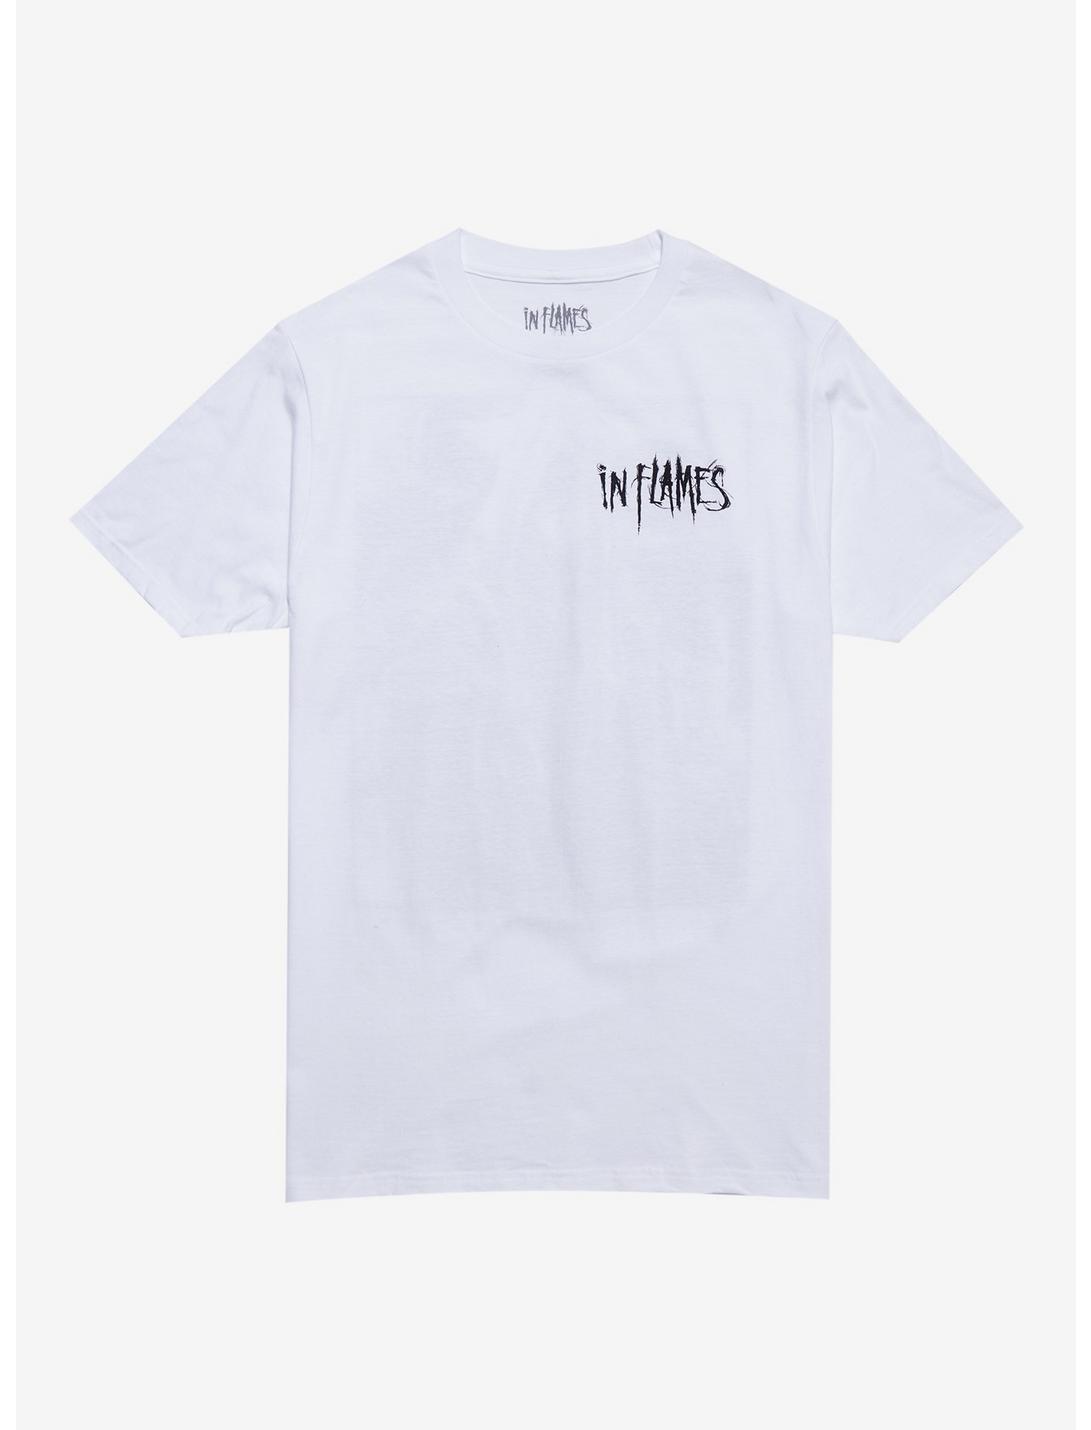 In Flames Countdown Has Begun T-Shirt, BRIGHT WHITE, hi-res